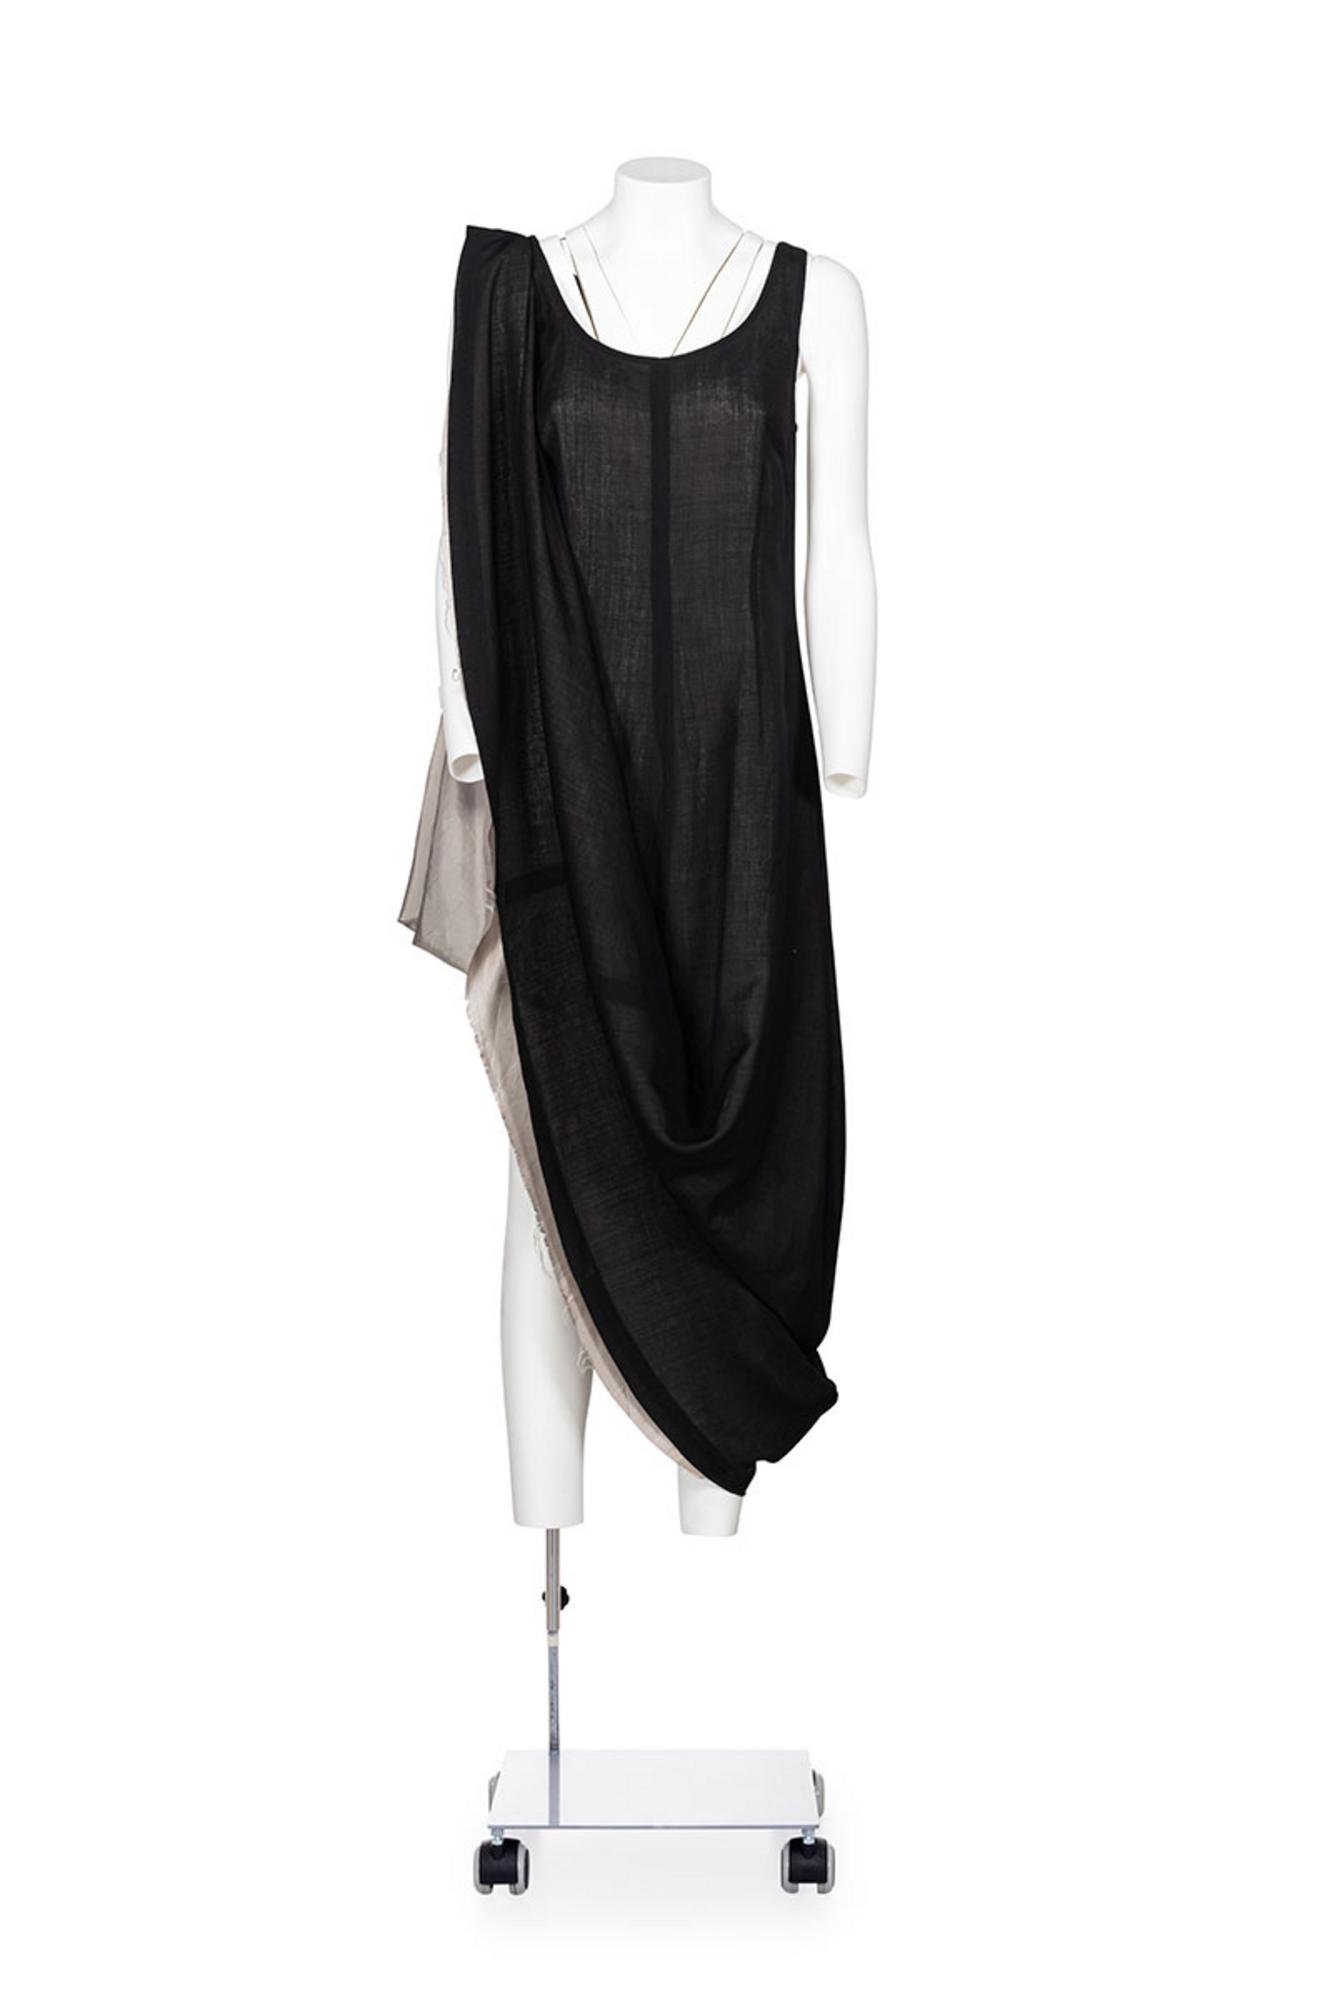 MAISON MARTIN MARGIELA Iconic and rare sleeveless dress with wide draping...